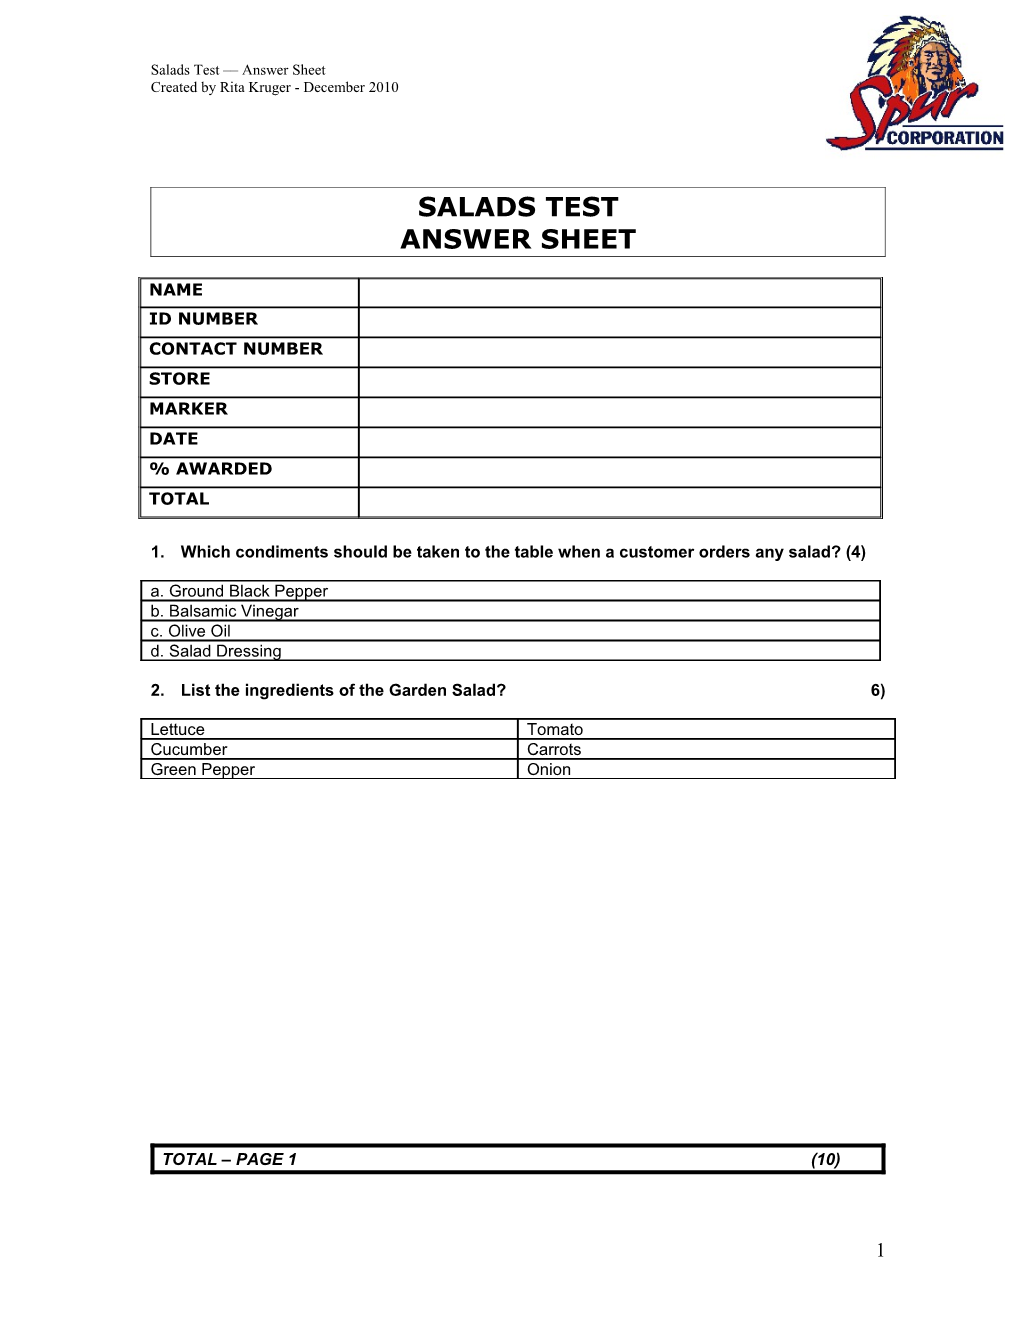 Salads Test Answer Sheet